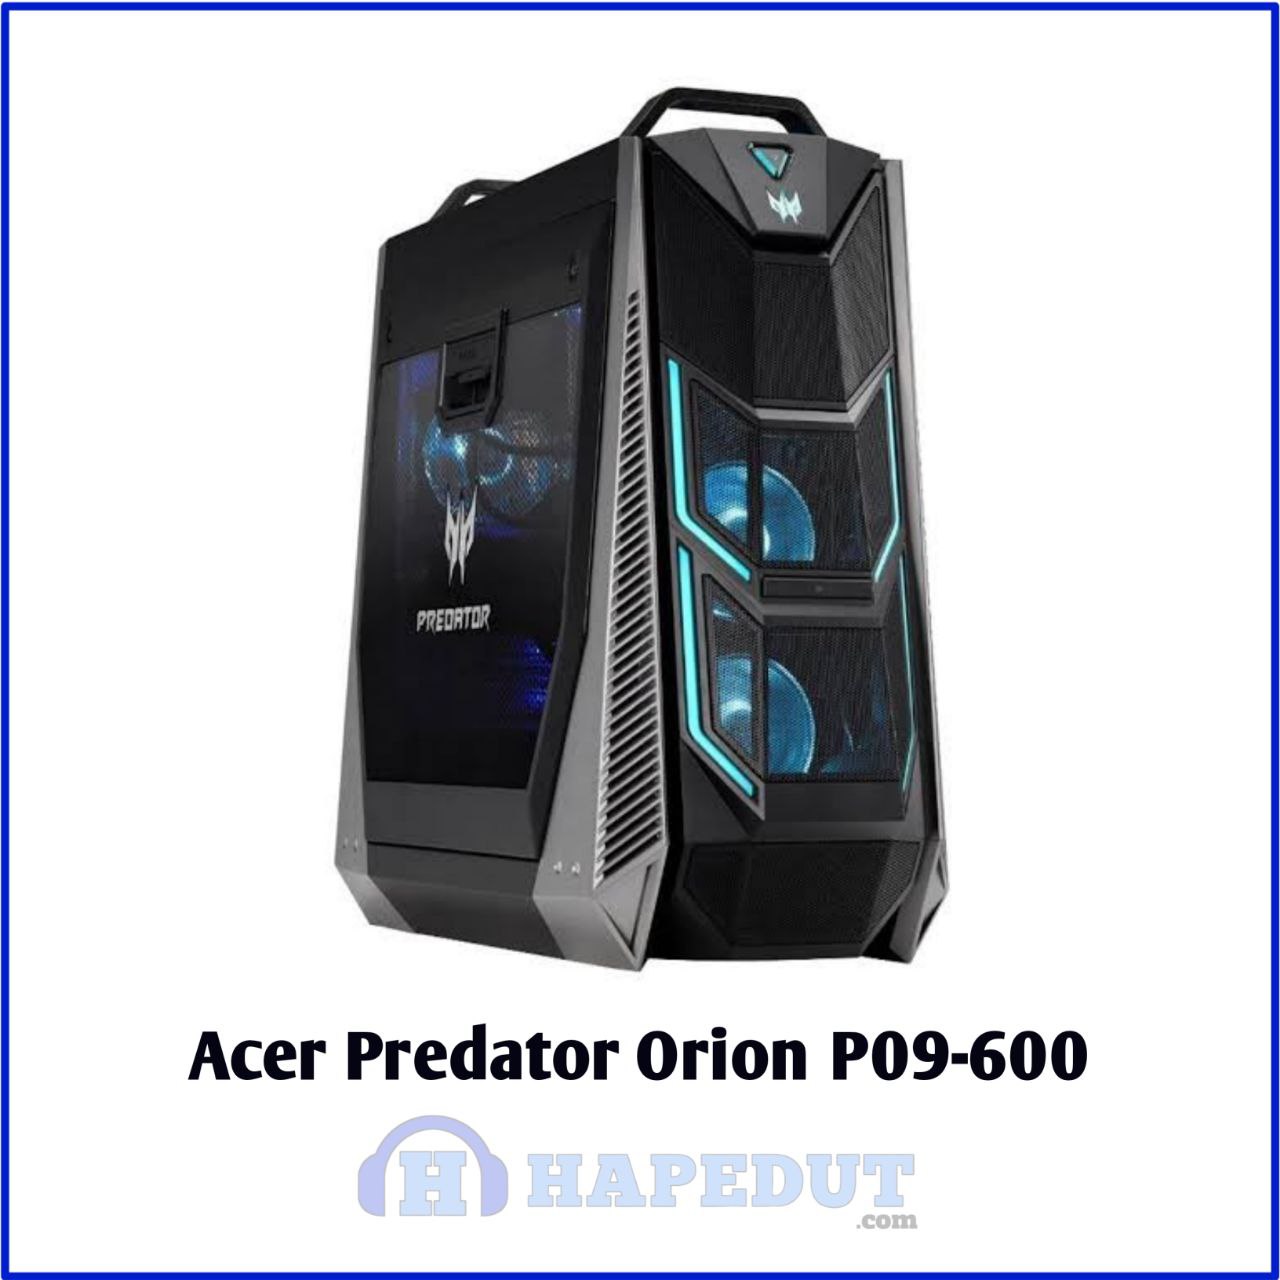 Acer Predator Orion P09-600 : Hapedut